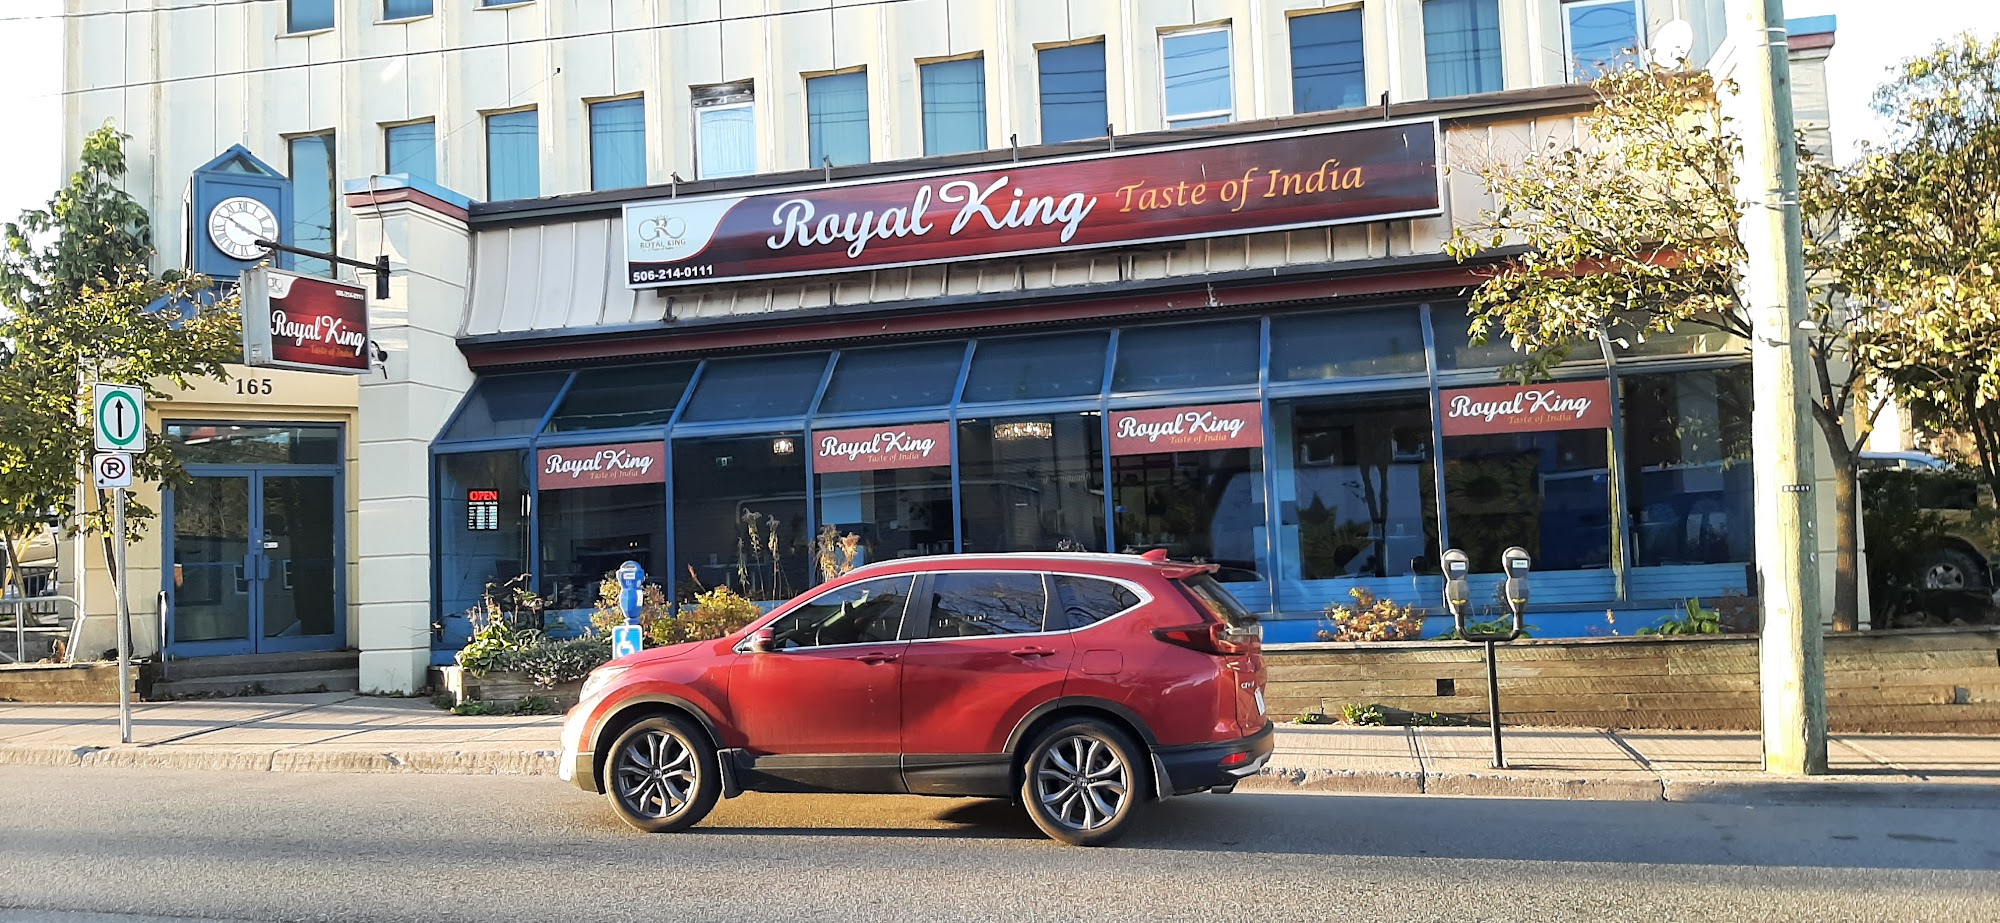 Royal King - Taste of India Saint John